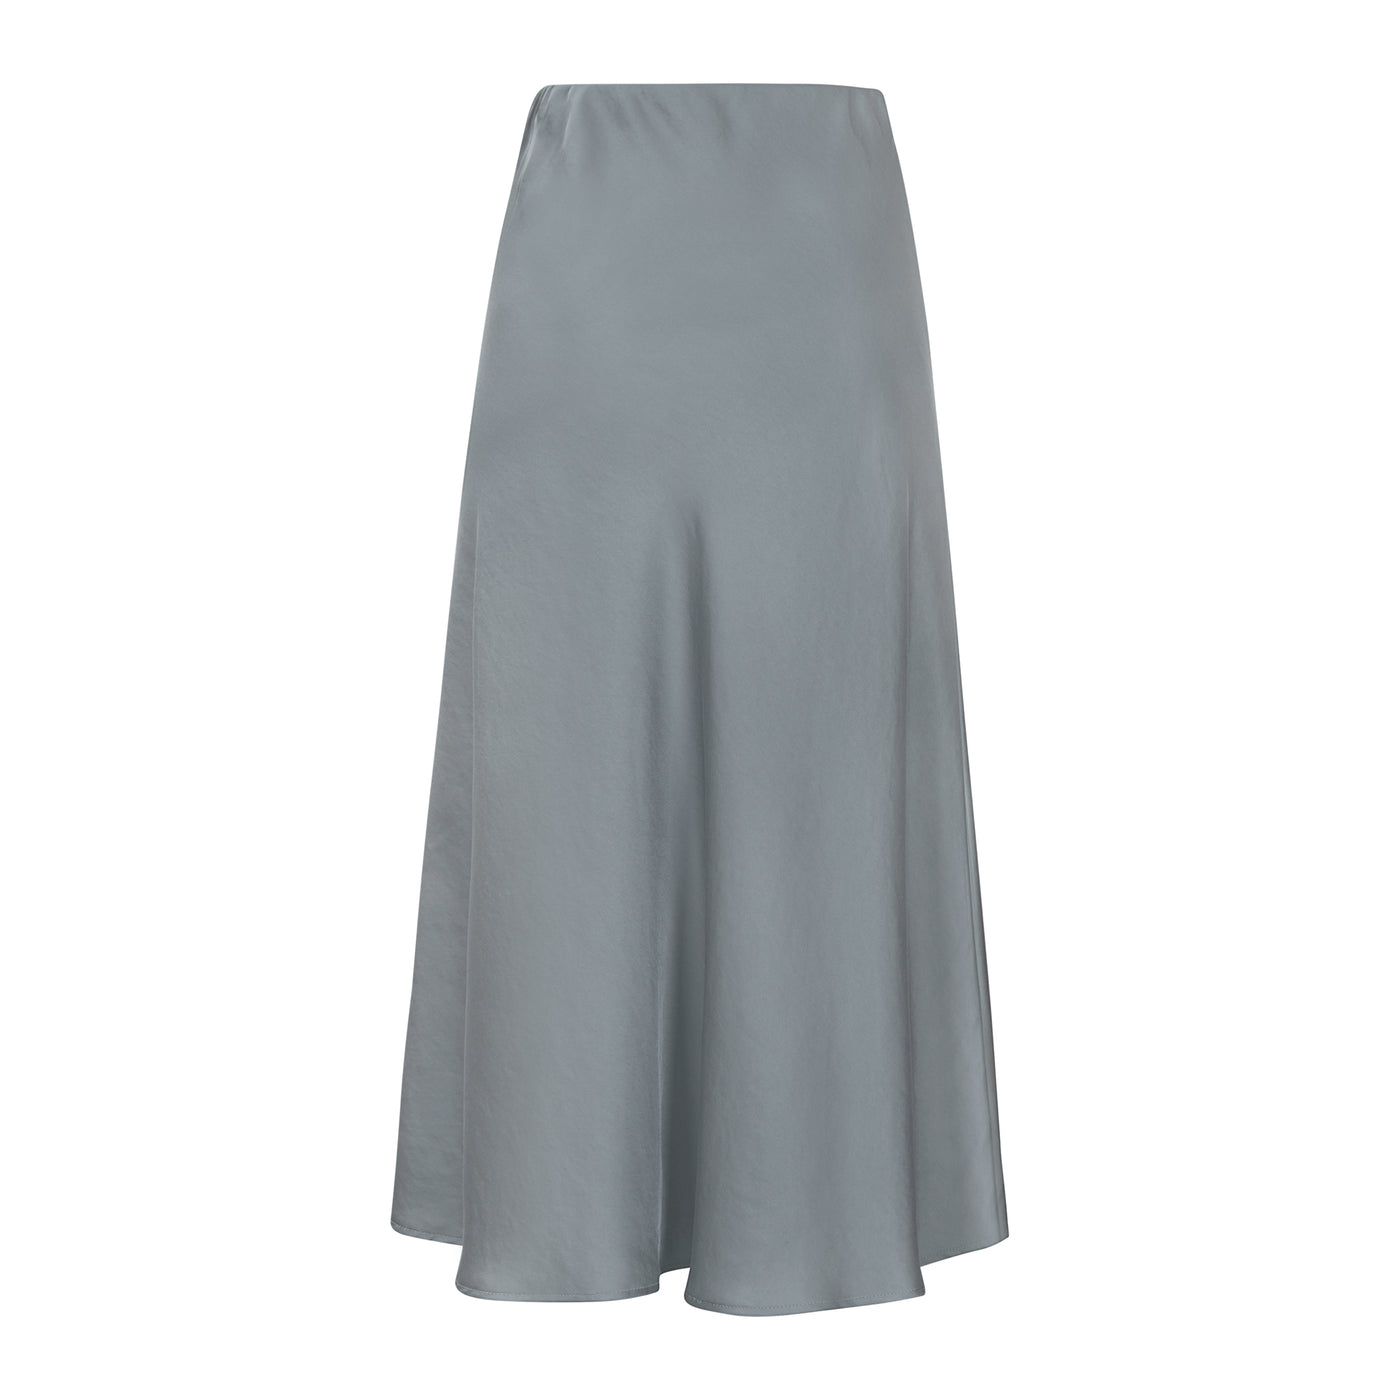 Soft Rebels SRAbia Midi Skirt Skirts & shorts 696 sharkskin